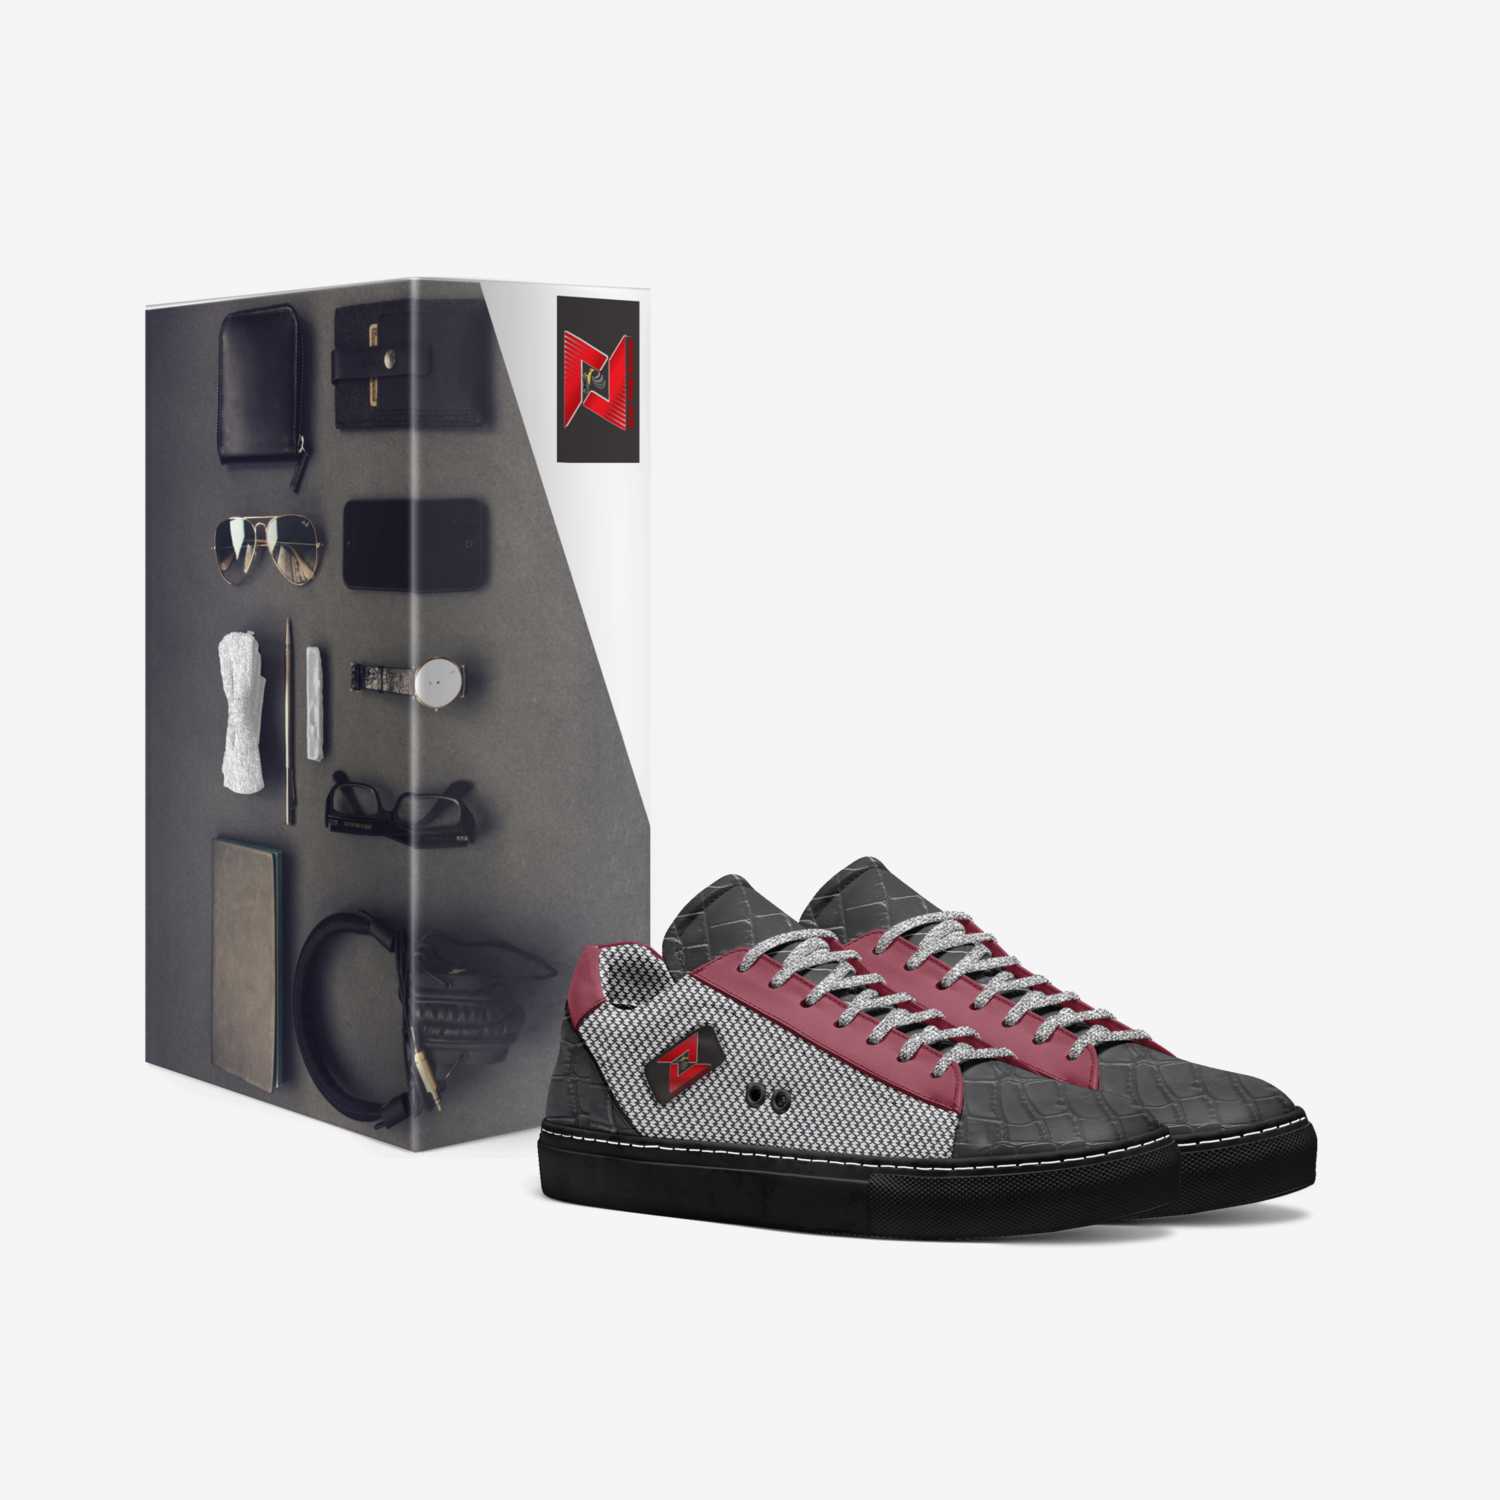 Nzuri Viatu Kuuma custom made in Italy shoes by Travis Cyntell | Box view